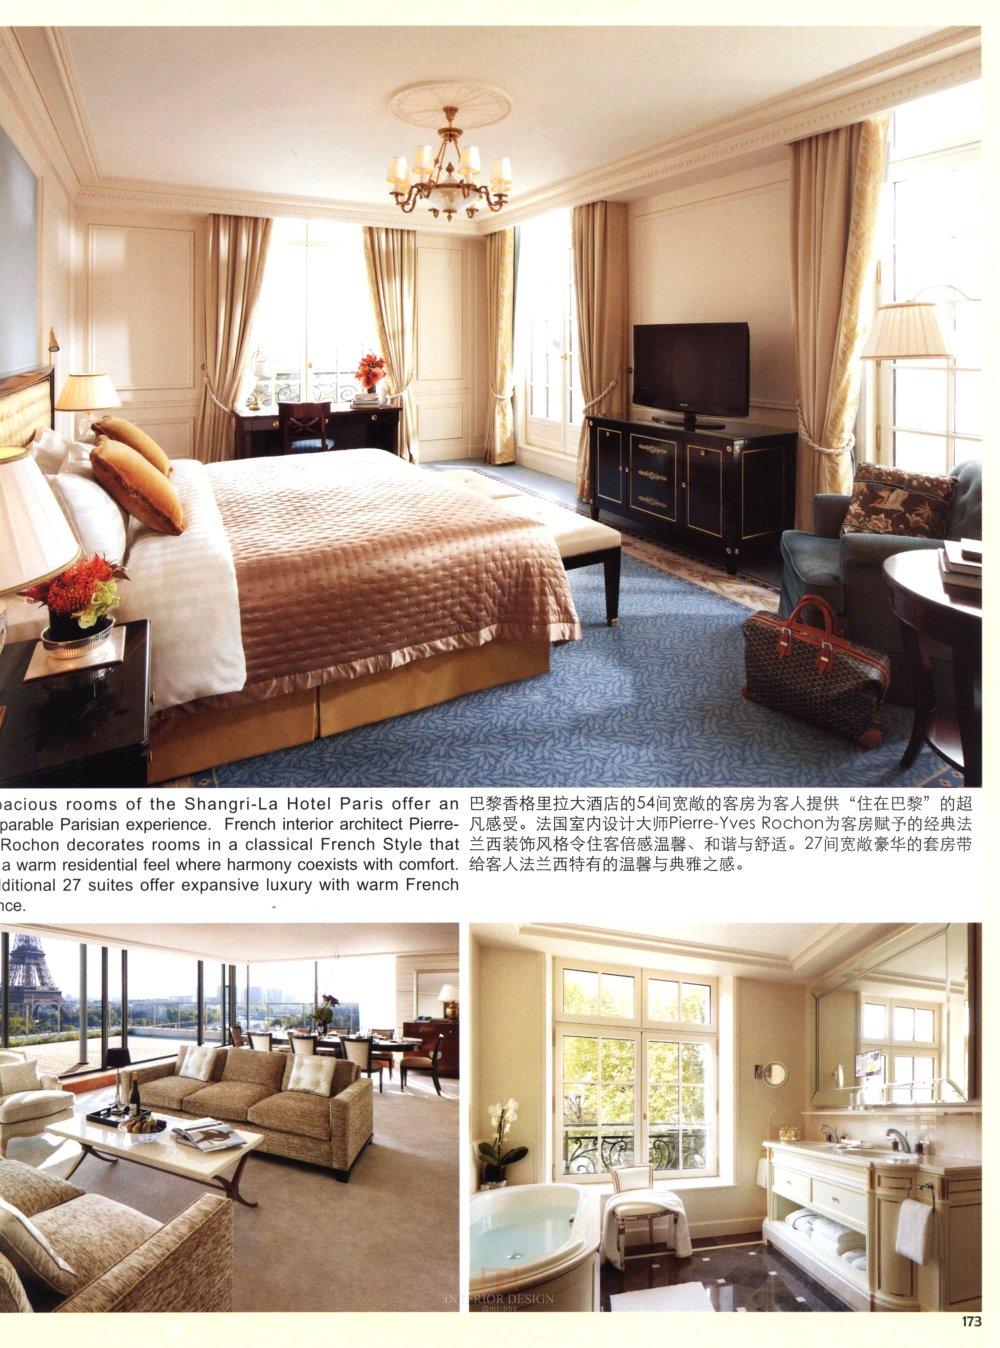 101全球酒店客房 101HOTELS GUEST ROOMS_图站_AiJpgg_com_168.jpg